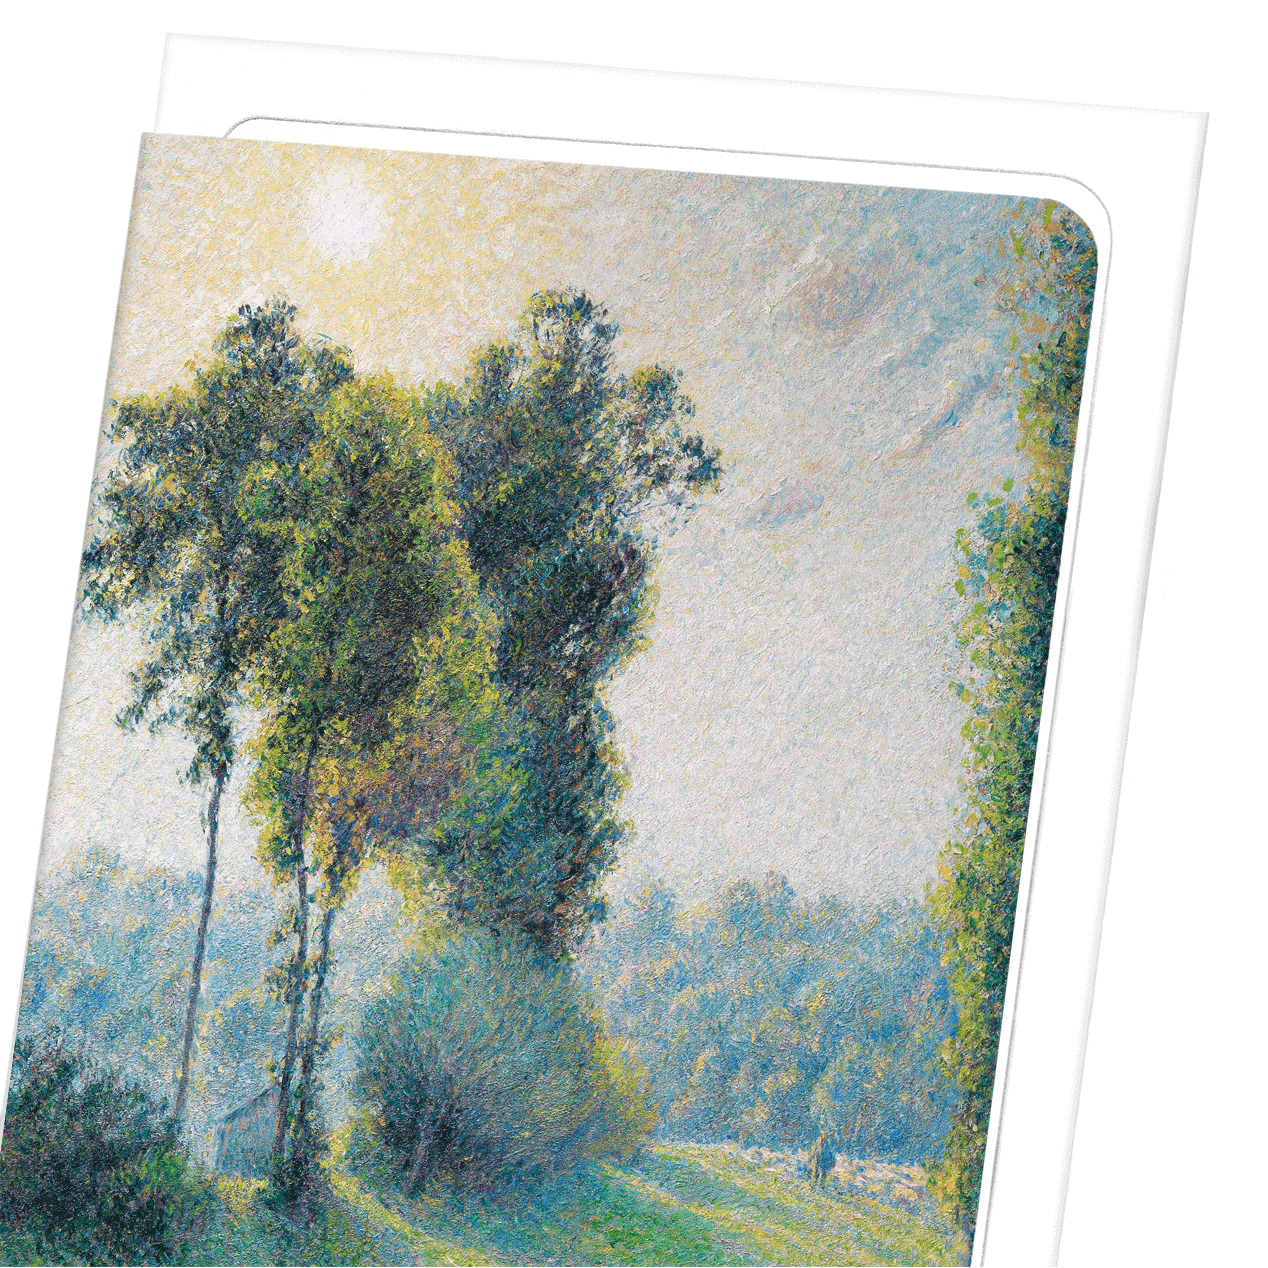 LANDSCAPE AT SAINT-CHARLES, SUNSET (1891)